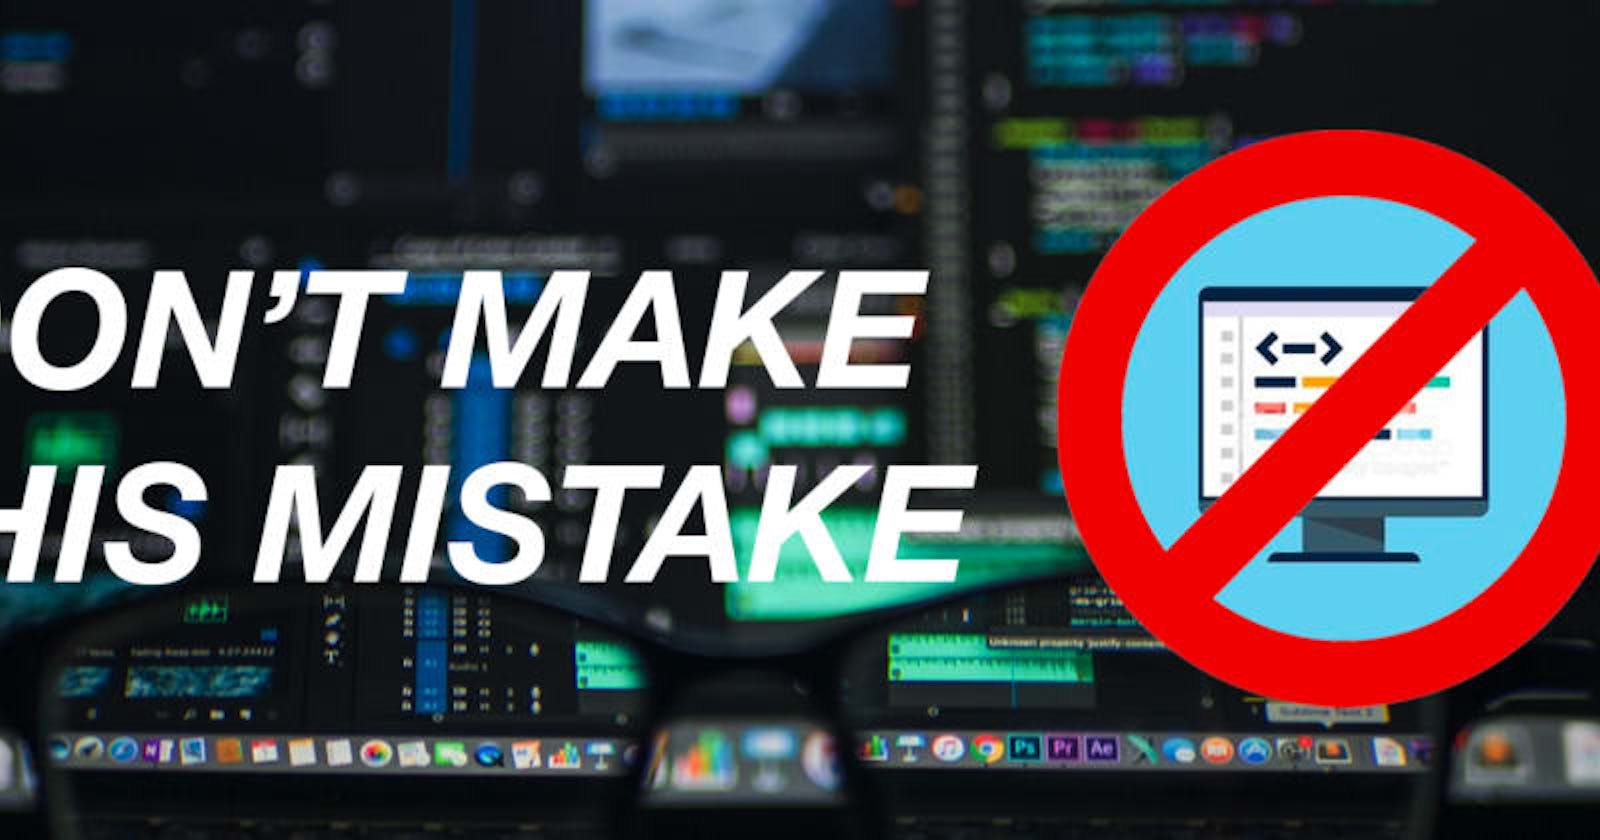 Starting a programming blog? Don’t make this mistake 🚫